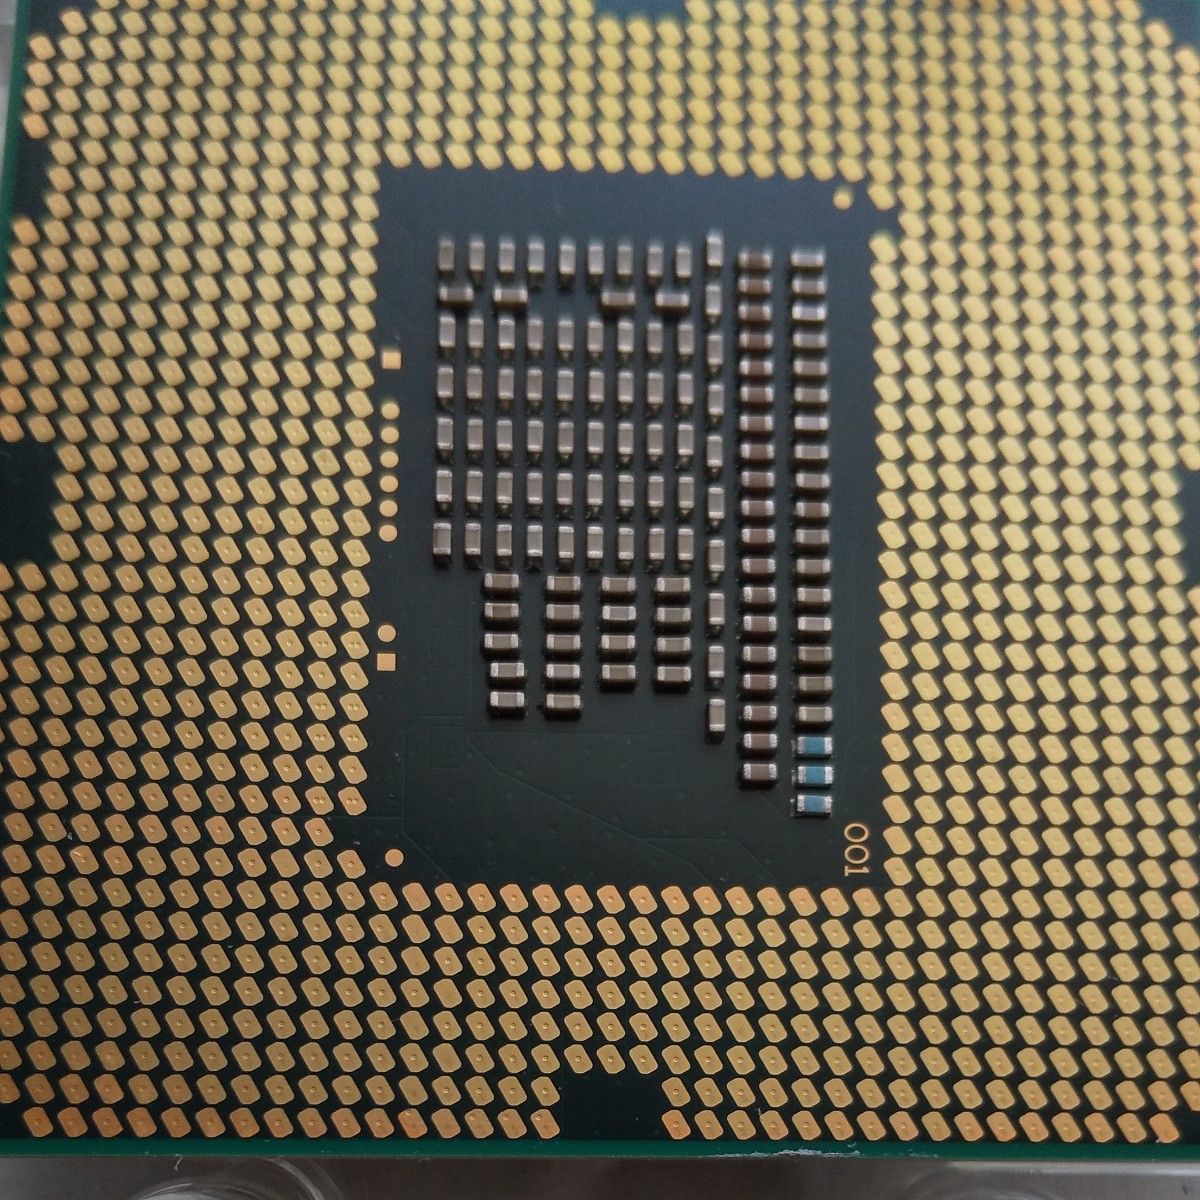 Intel Core i3 -2120